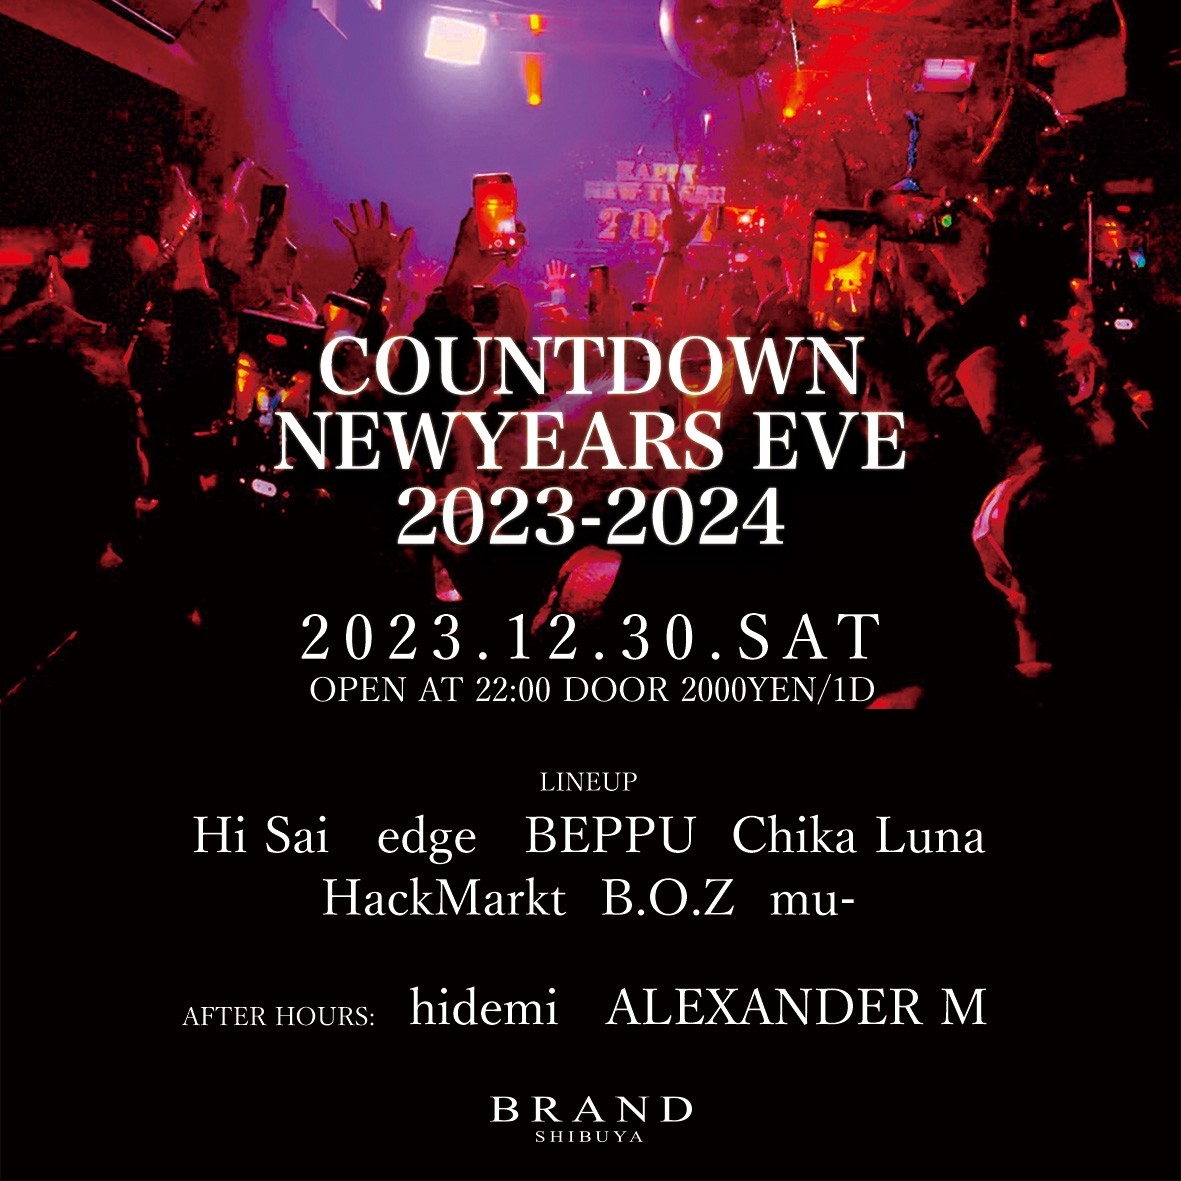 COUNTDOWN
NEWYEARS EVE
2023-2024 2023年12月30日（土曜日）に渋谷 クラブのBRAND SHIBUYAで開催されるHOUSEイベント